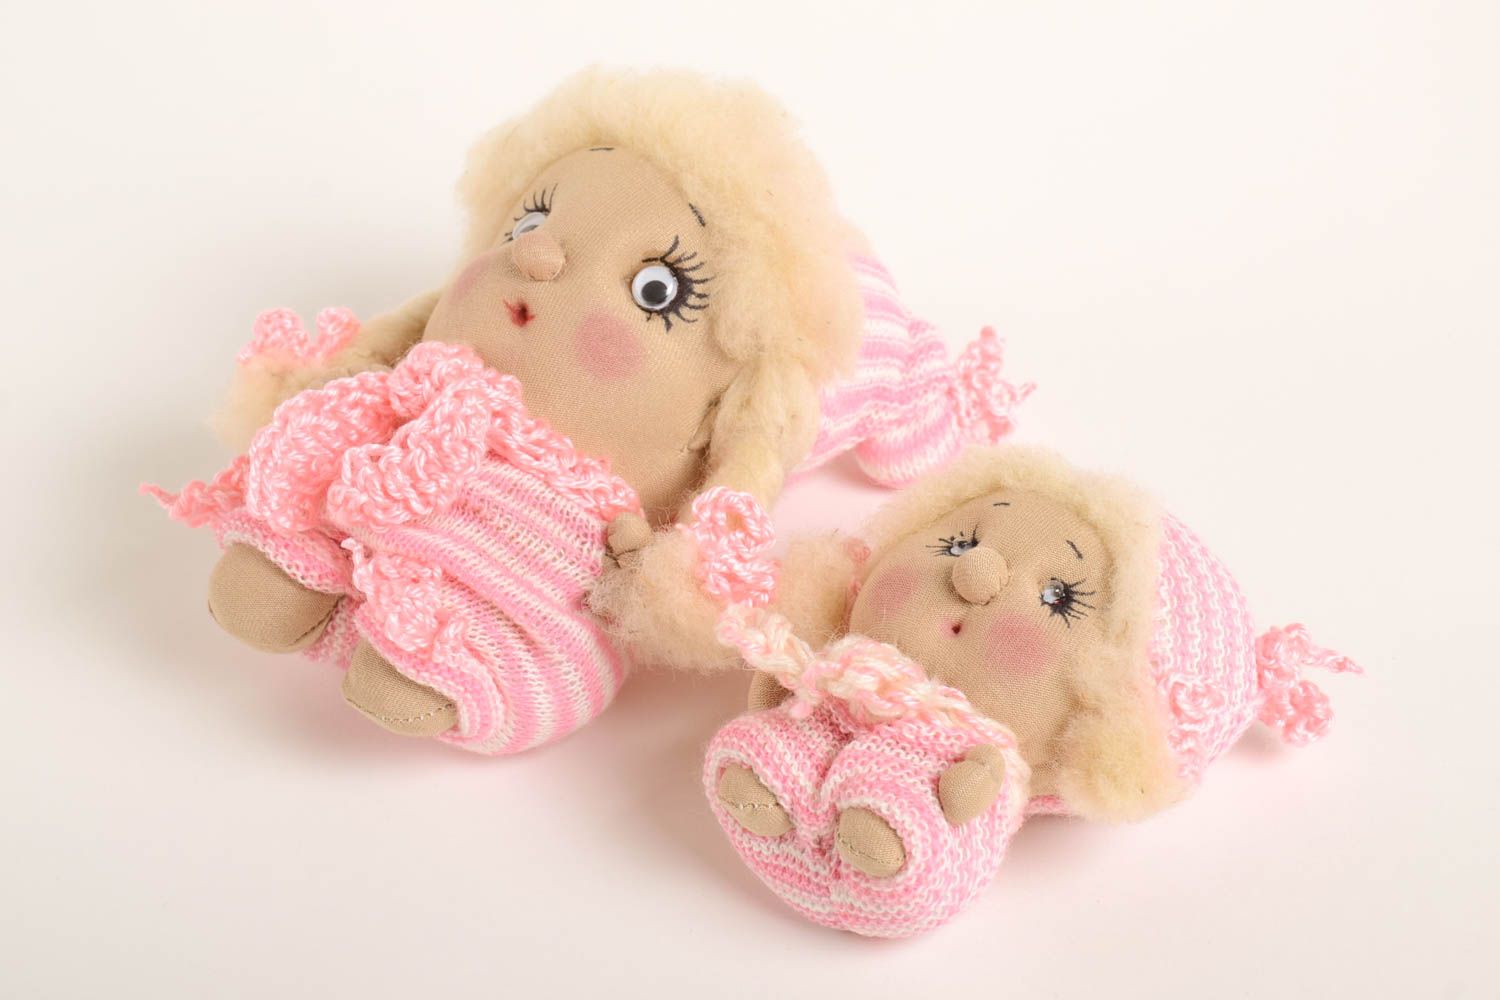 Handmade soft toys for children cute toys nursery decor ideas gift for baby photo 4